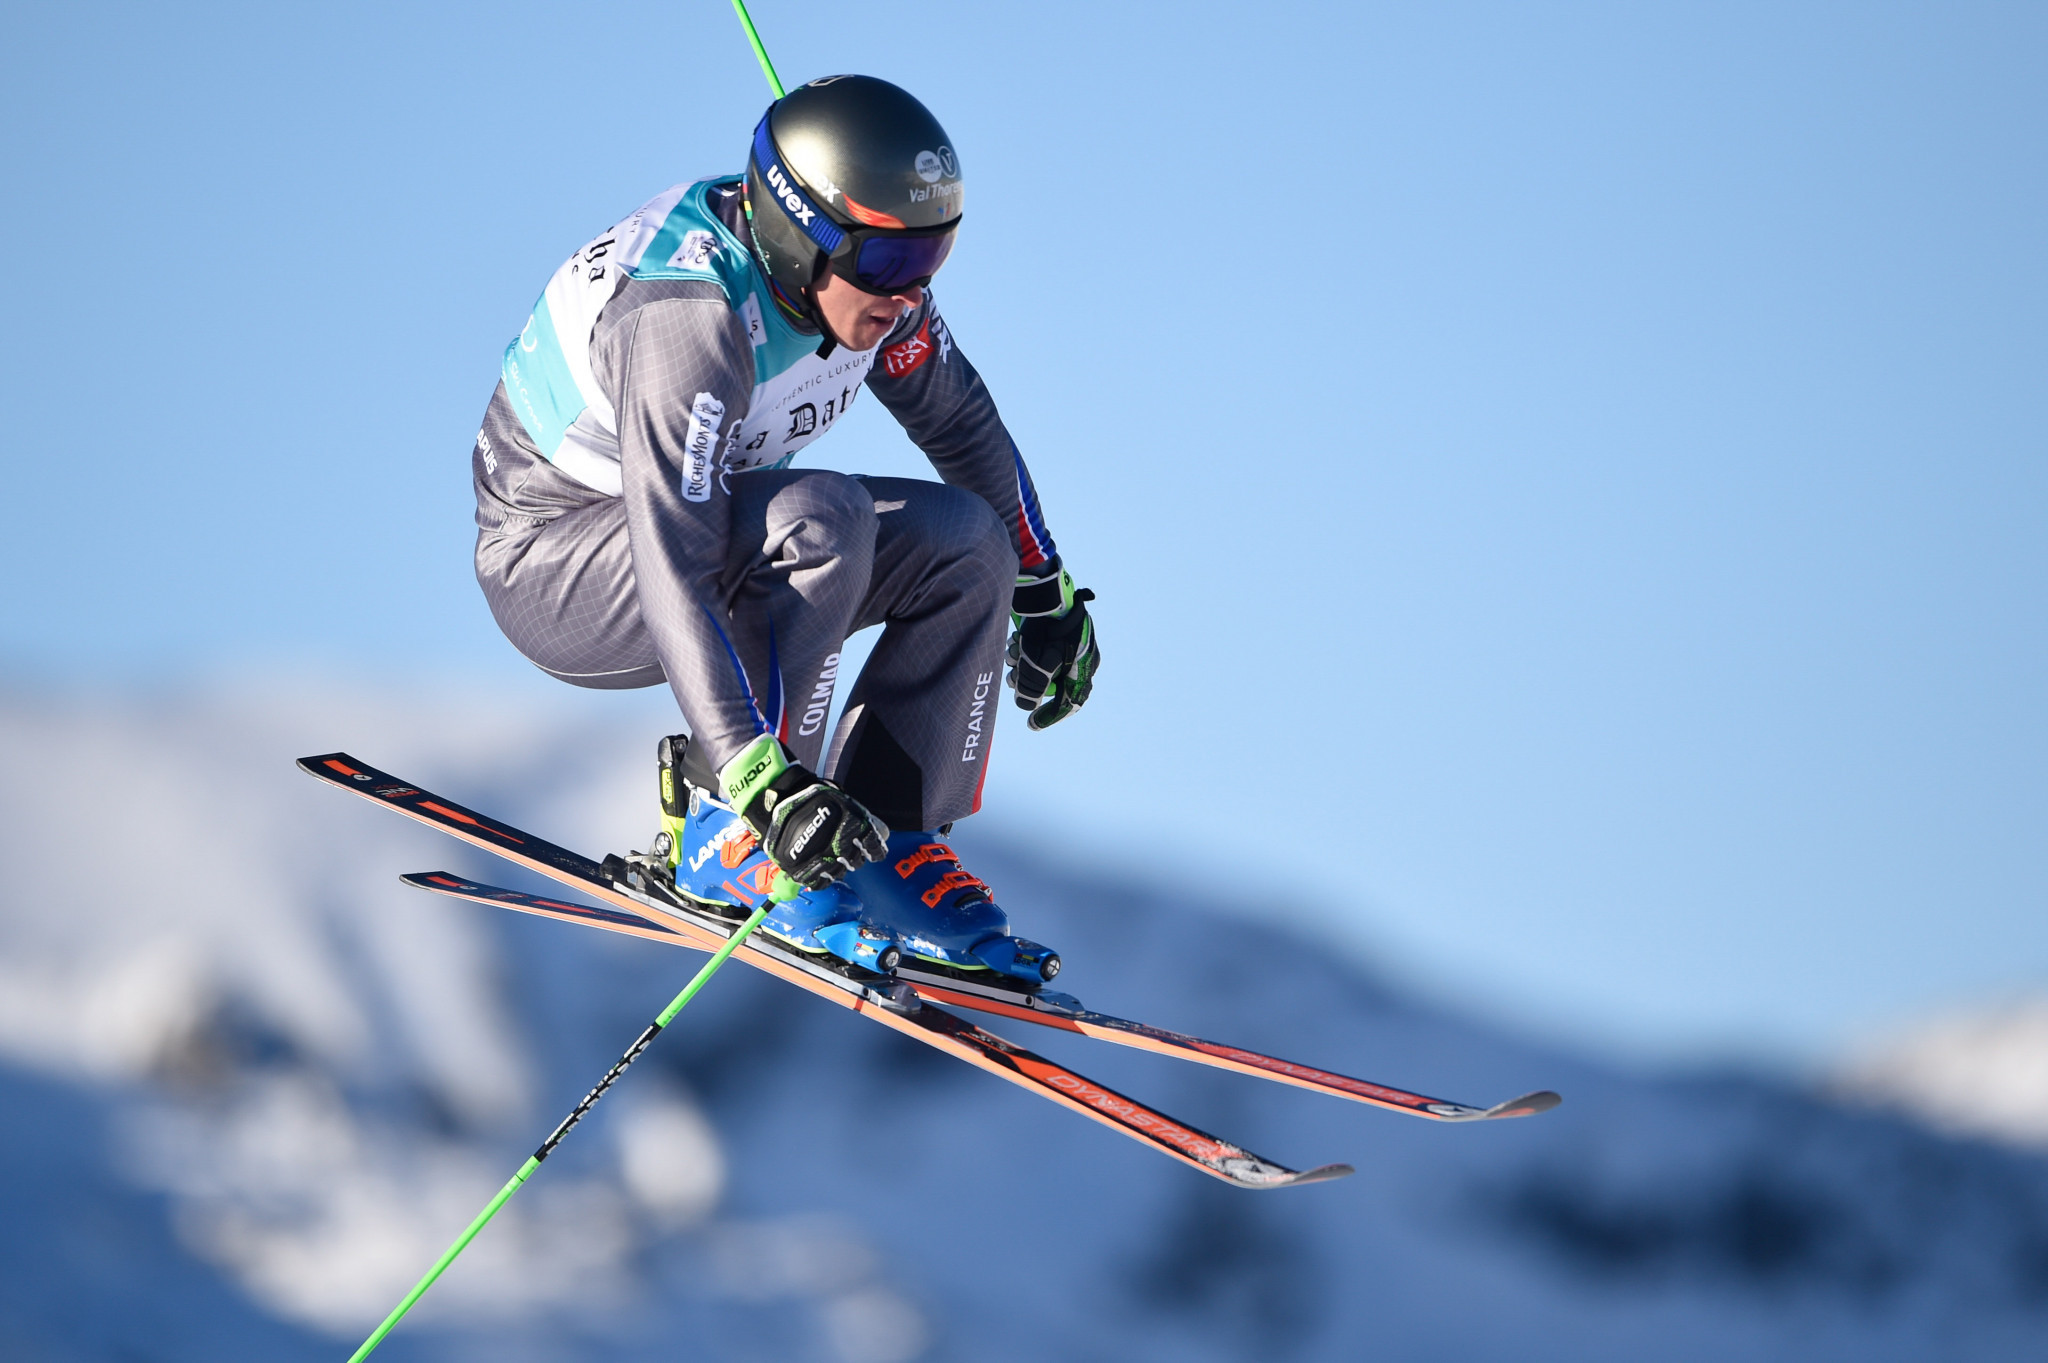 FIS Freestyle Ski World Cup set to resume in Montafon